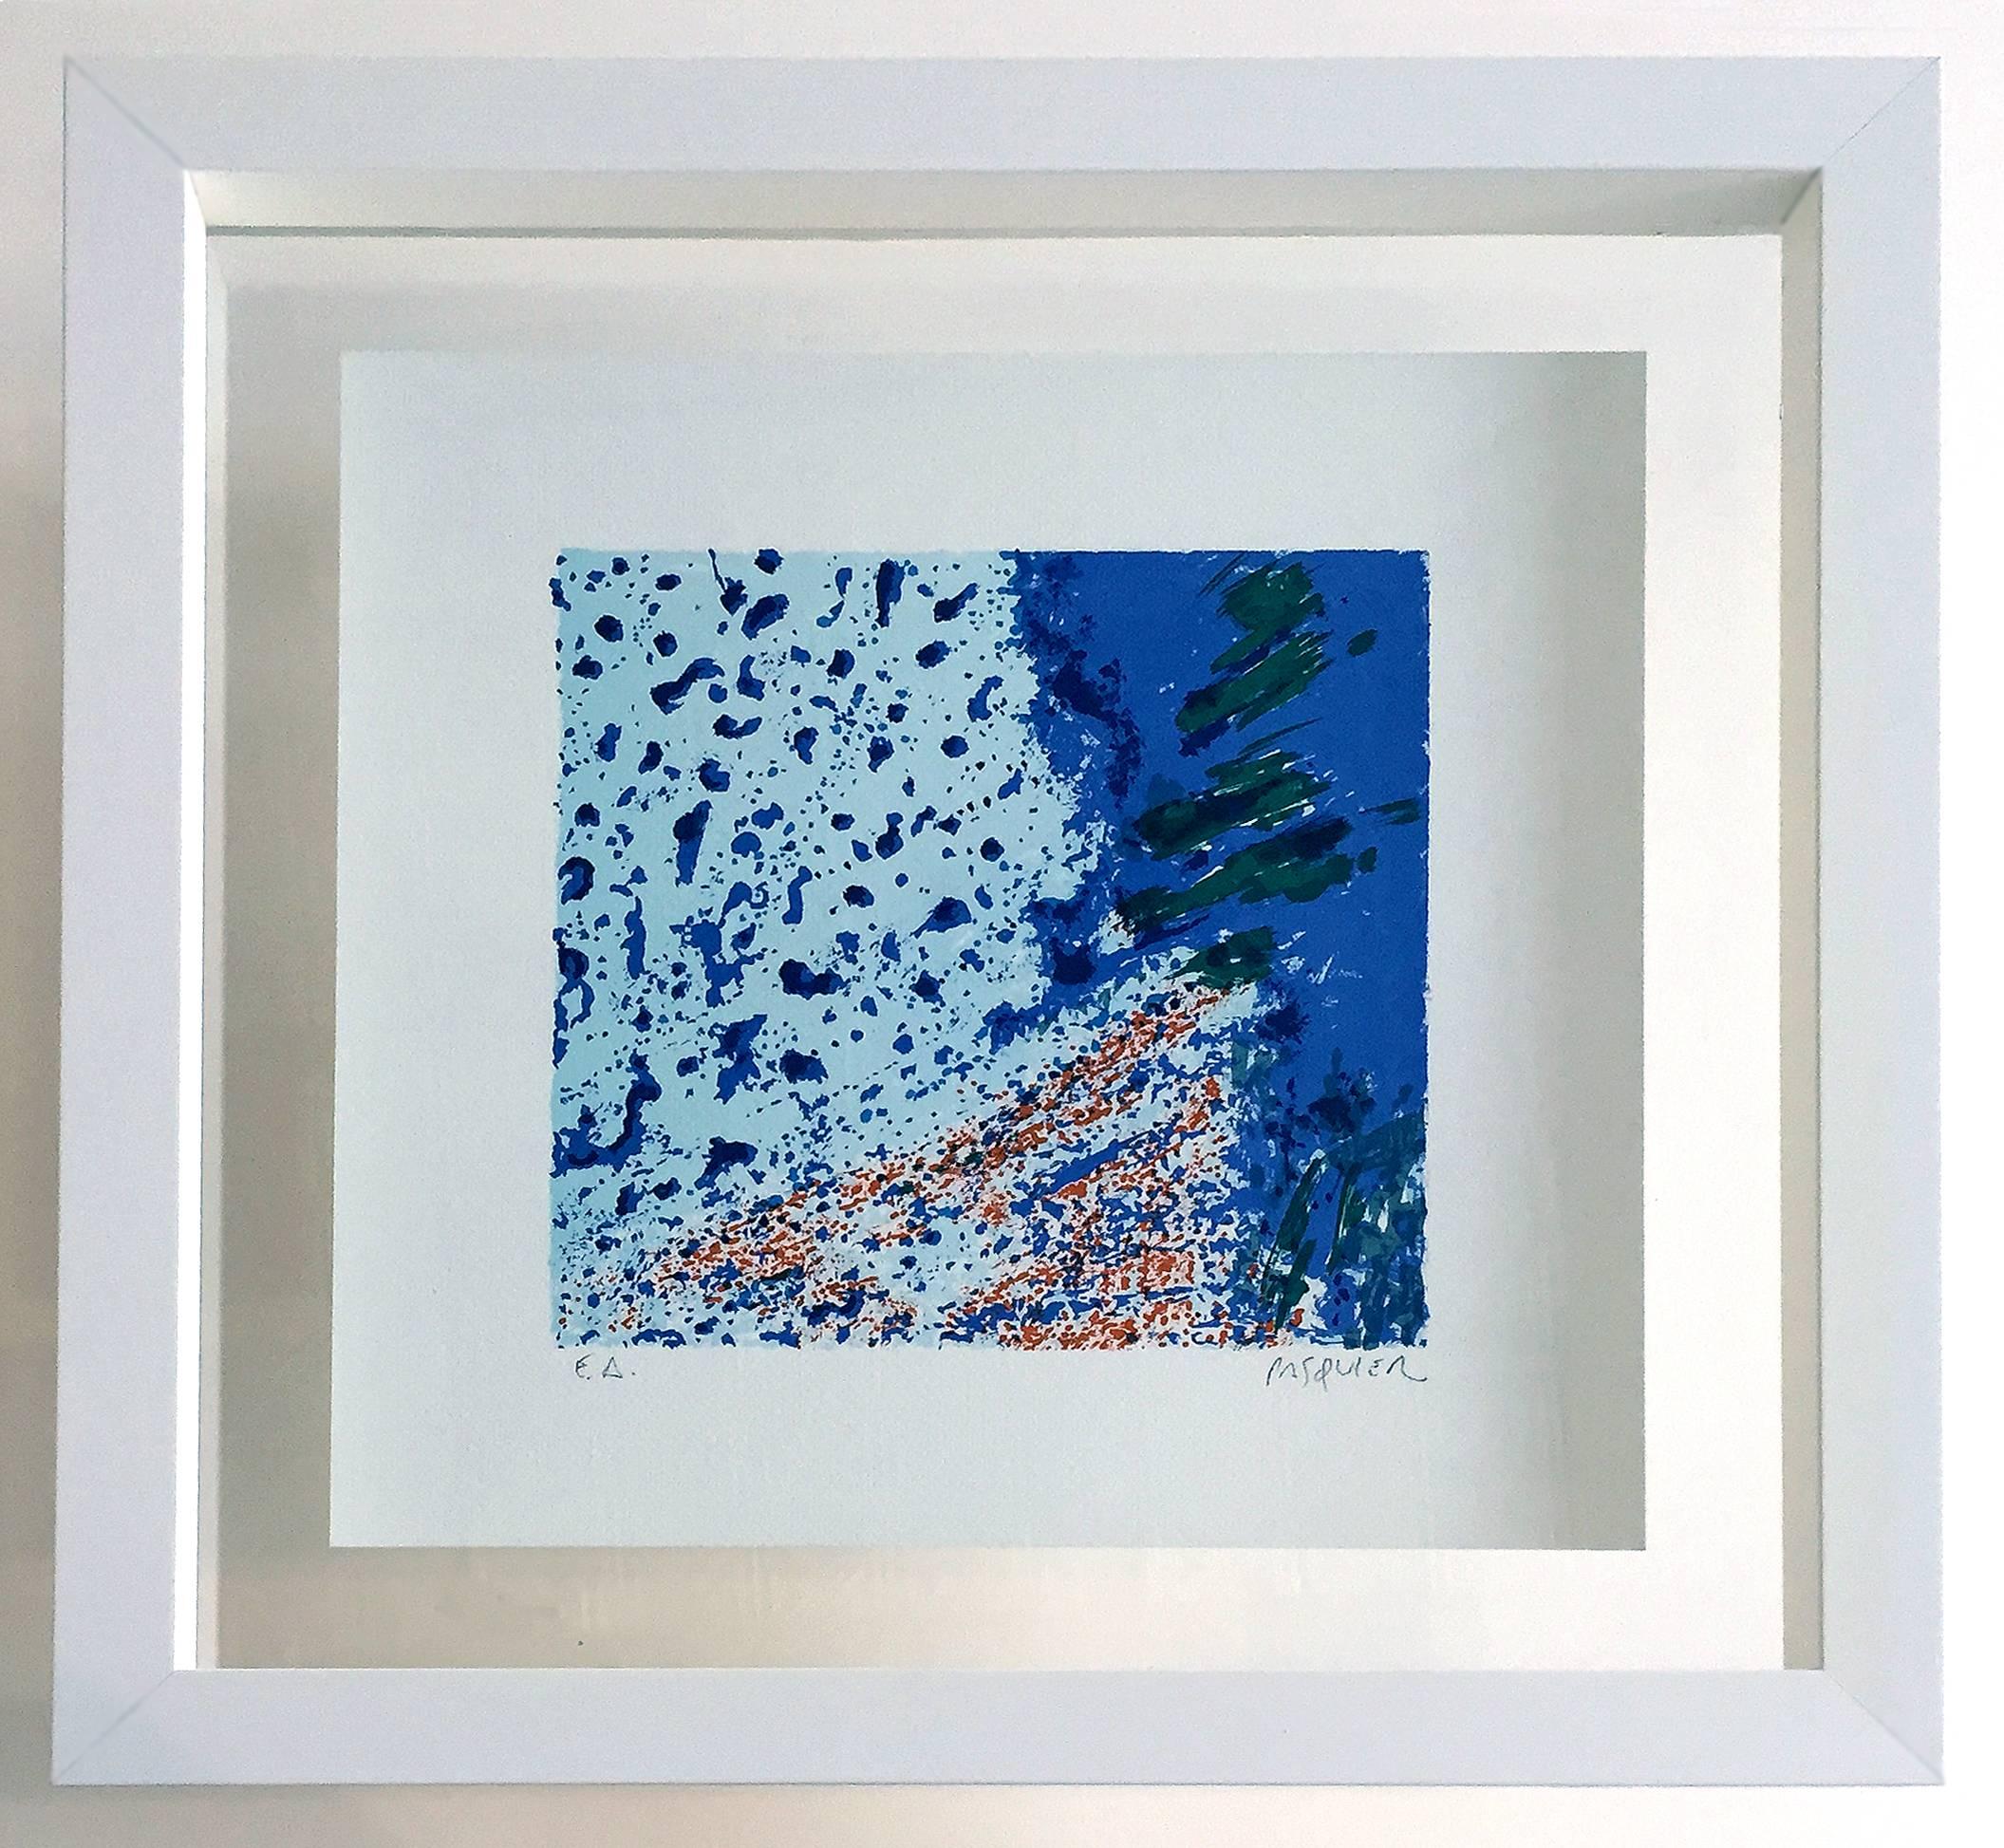 Noël Pasquier Abstract Print - Bleu tone Abstract 